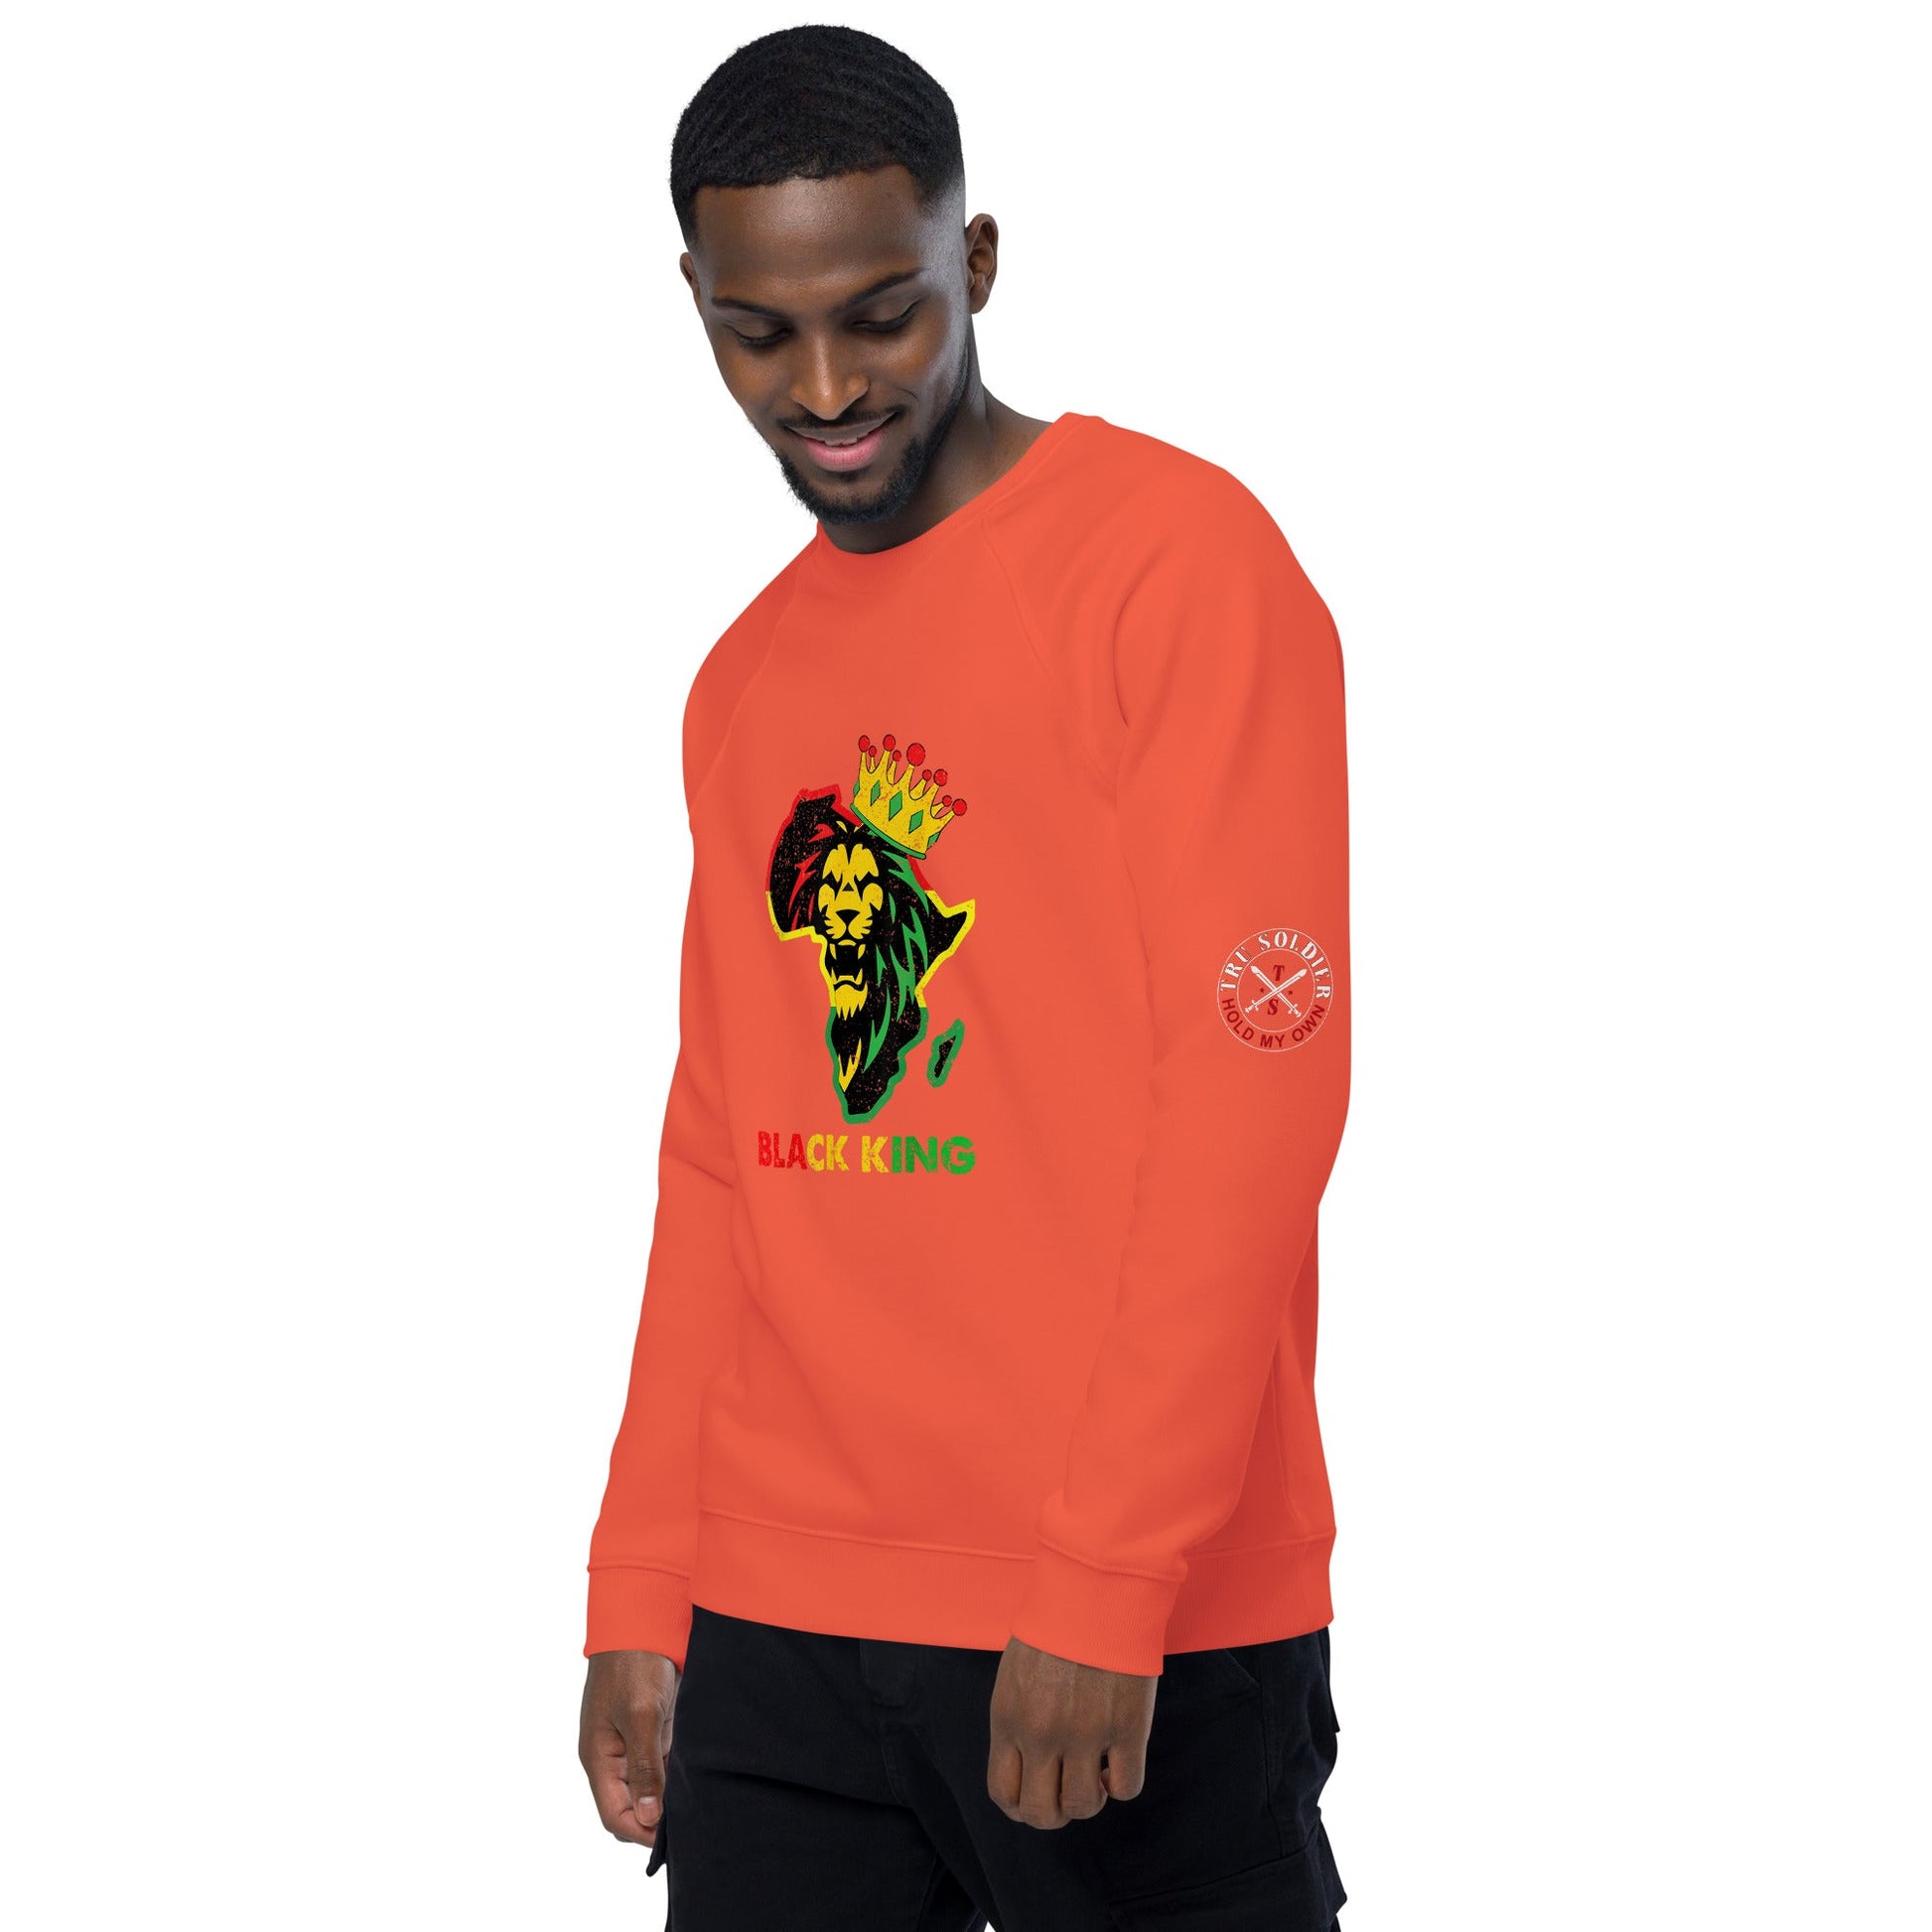 Tru Soldier Sportswear  Black King organic raglan sweatshirt